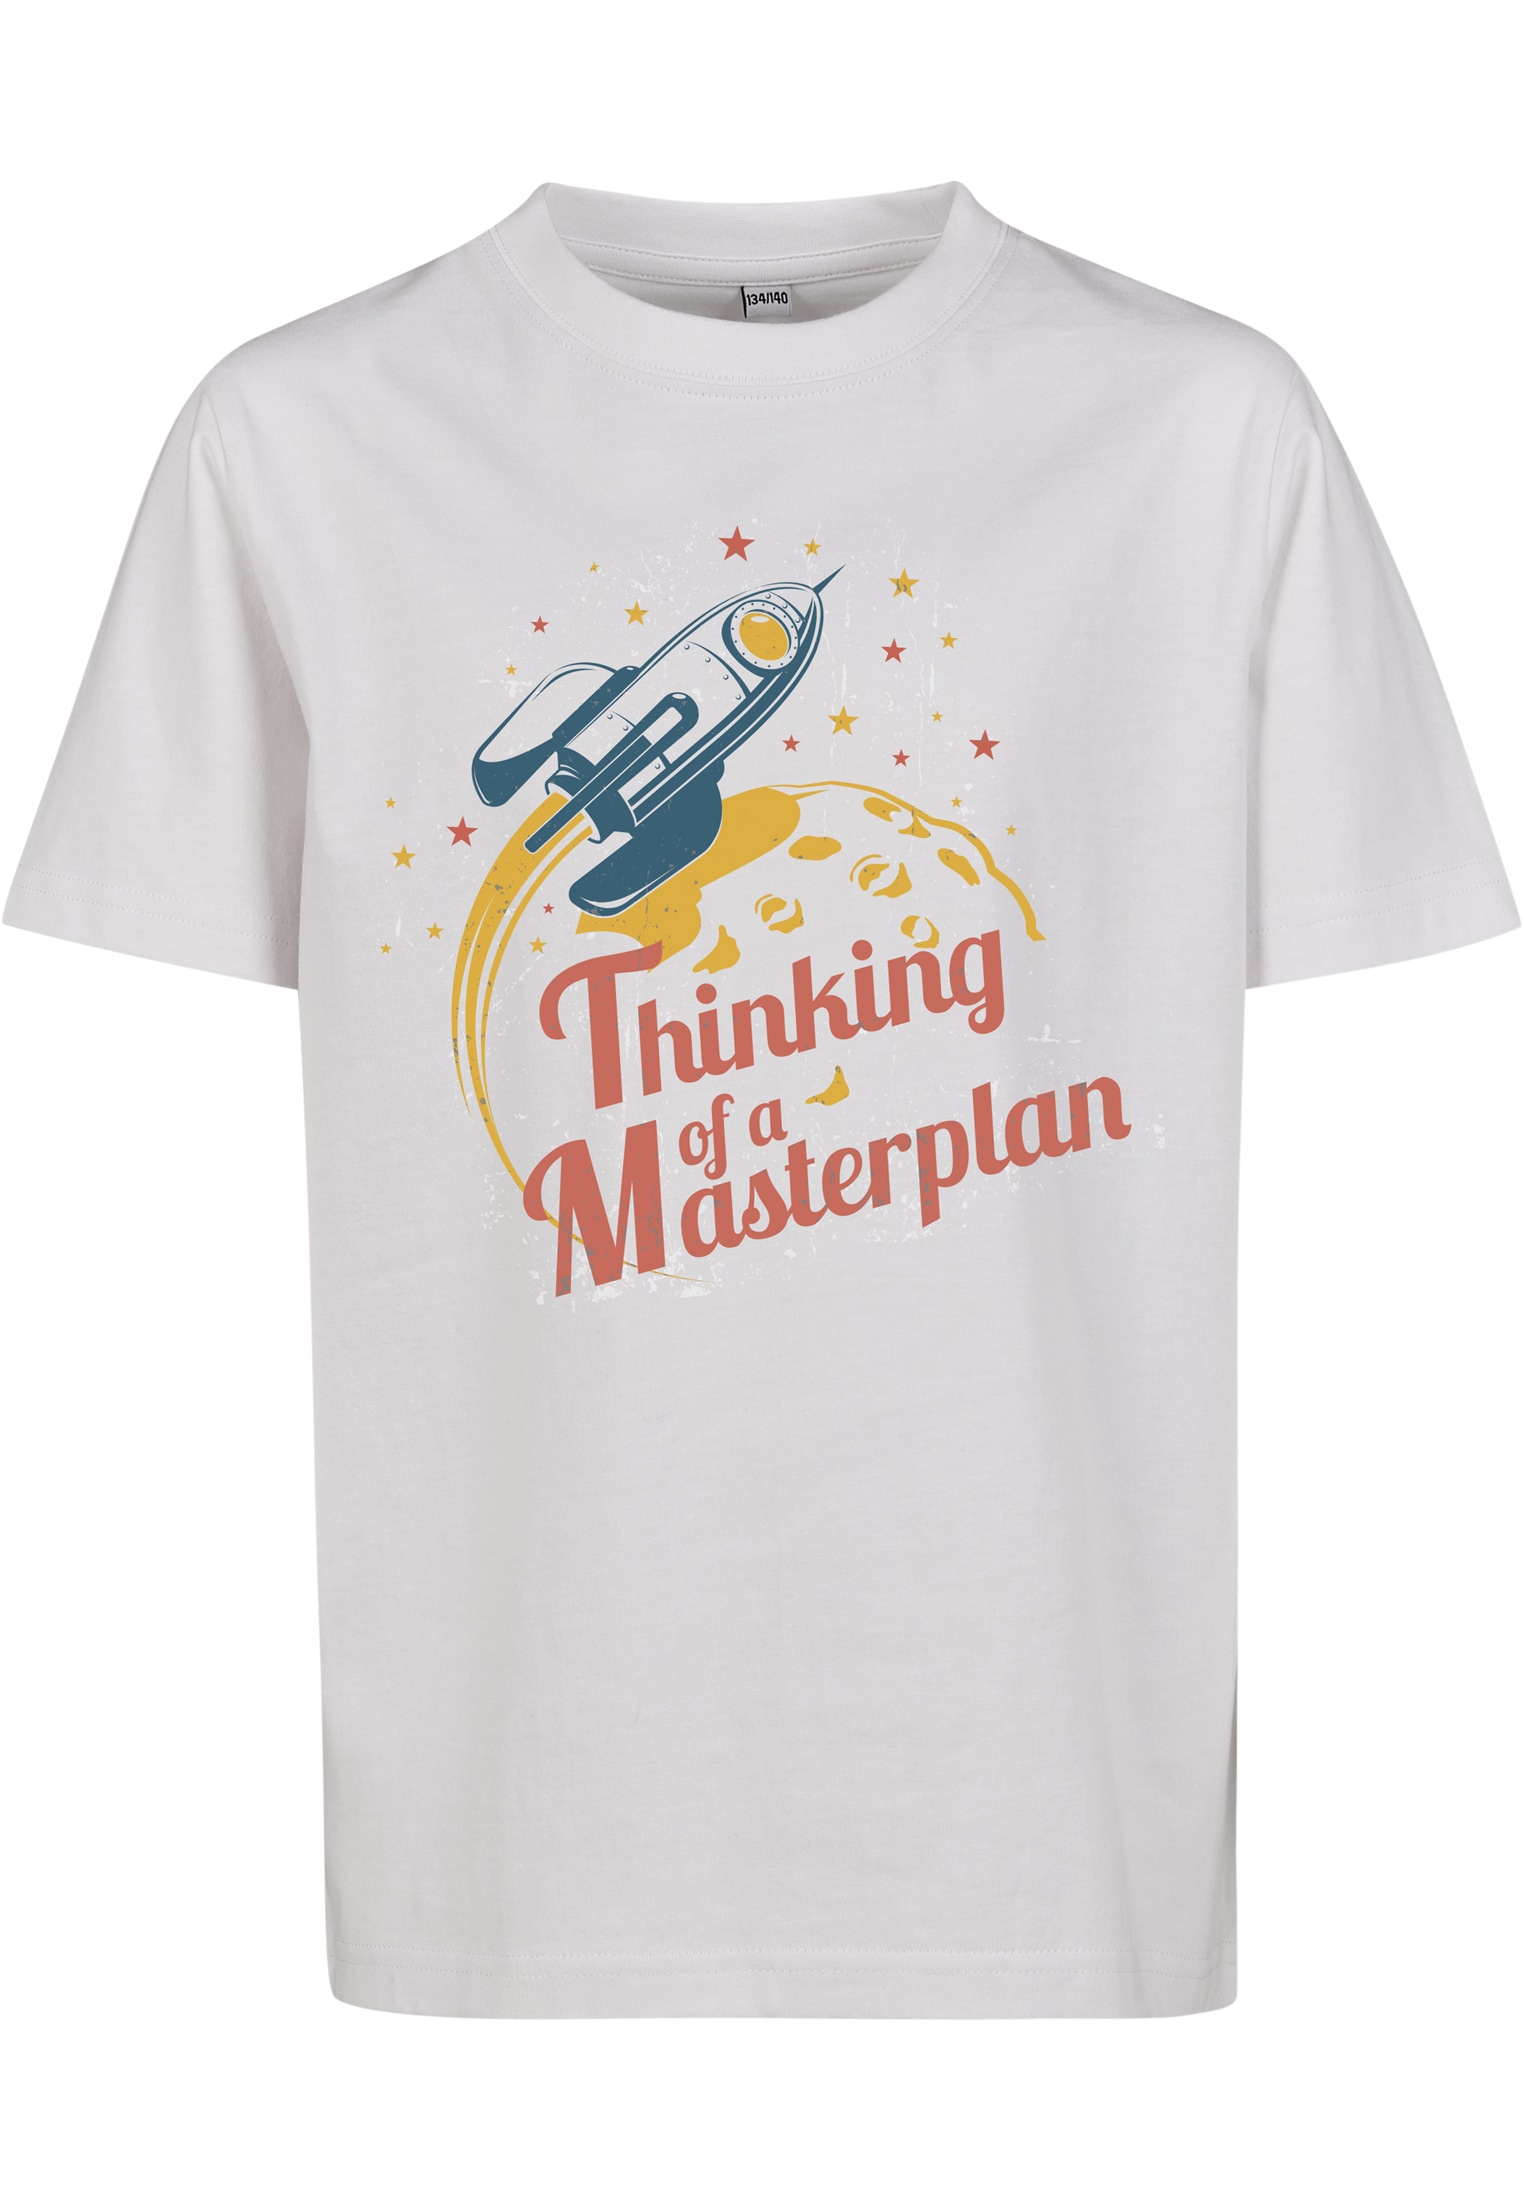 Of Kids (1 Thinking »Kinder MisterTee Masterplan Tee«, BAUR T-Shirt tlg.) A kaufen |